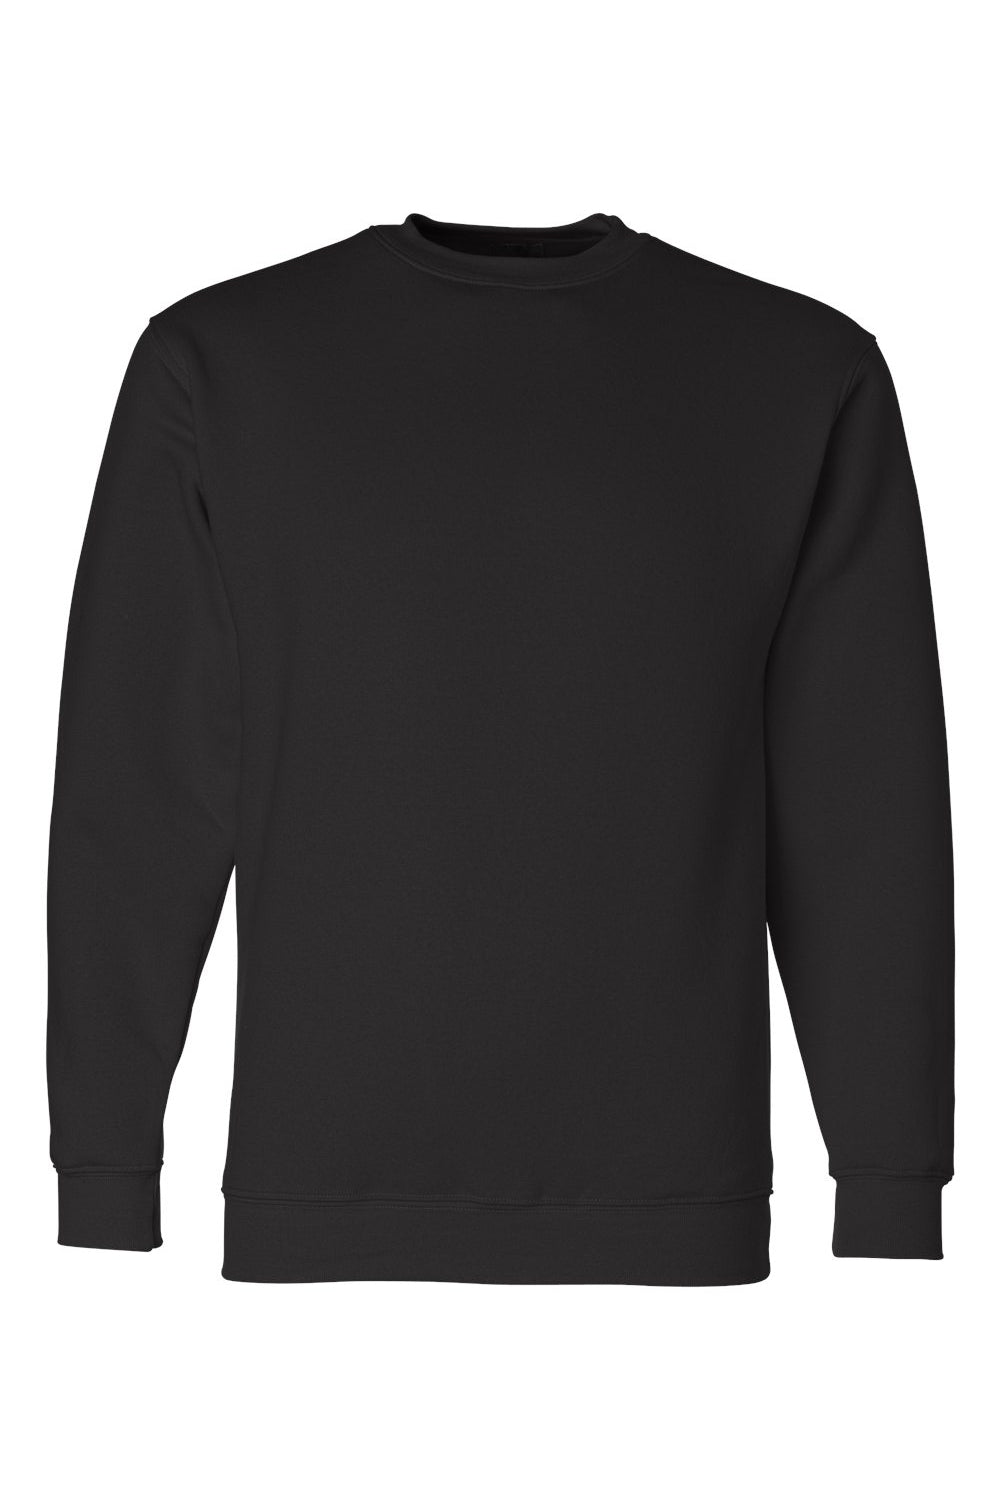 Bayside BA1102 Mens USA Made Crewneck Sweatshirt Black Flat Front